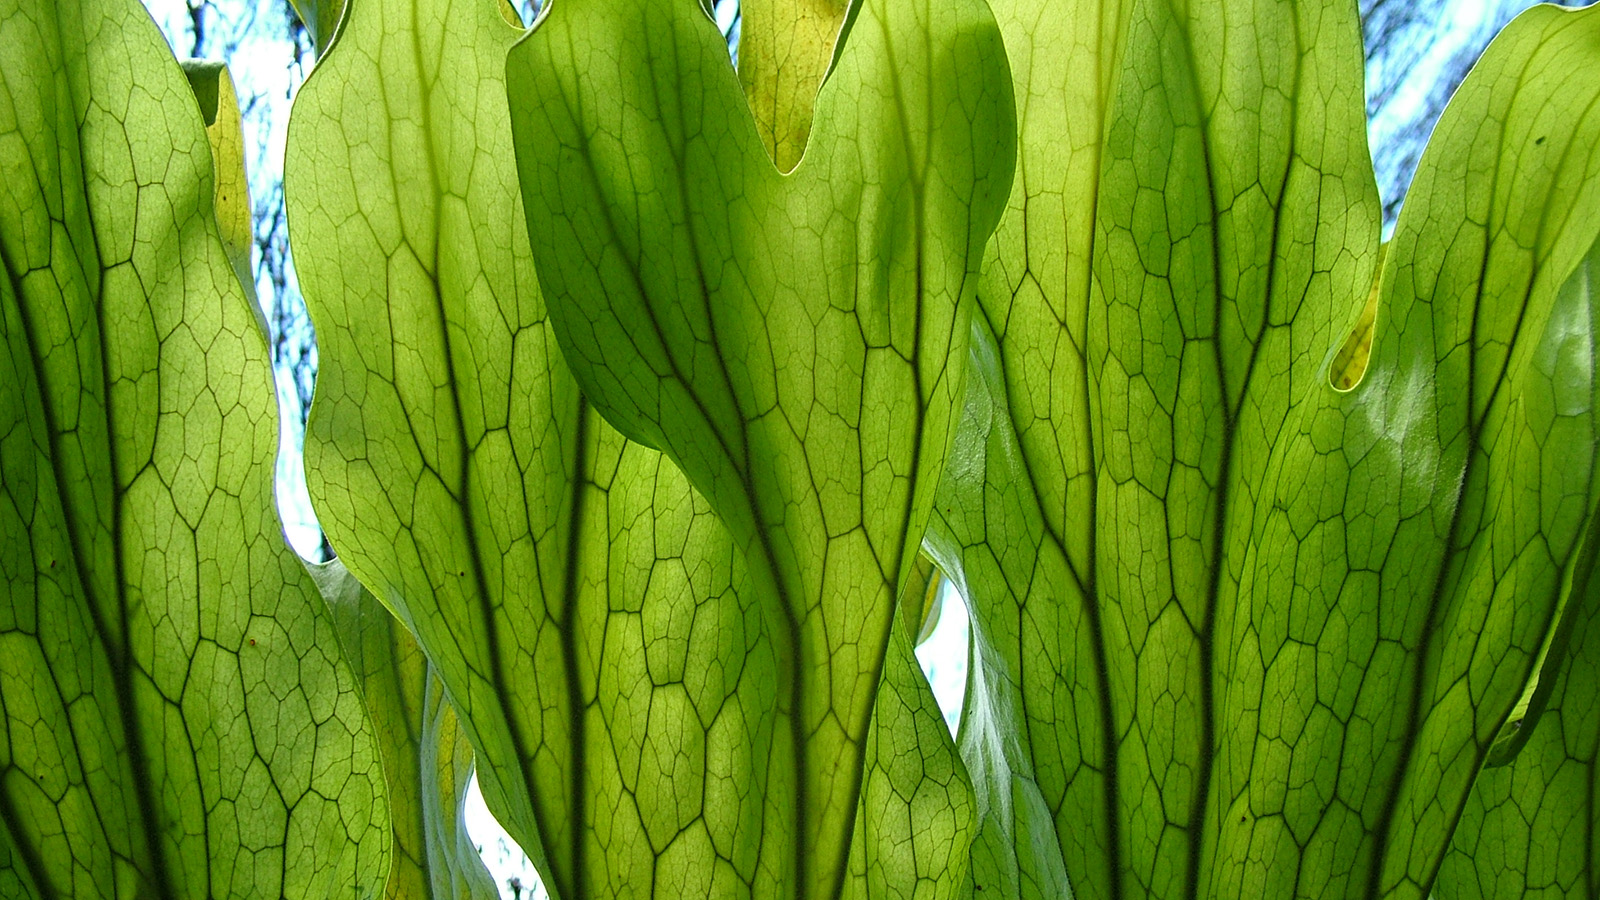 Flora: Leaf texture